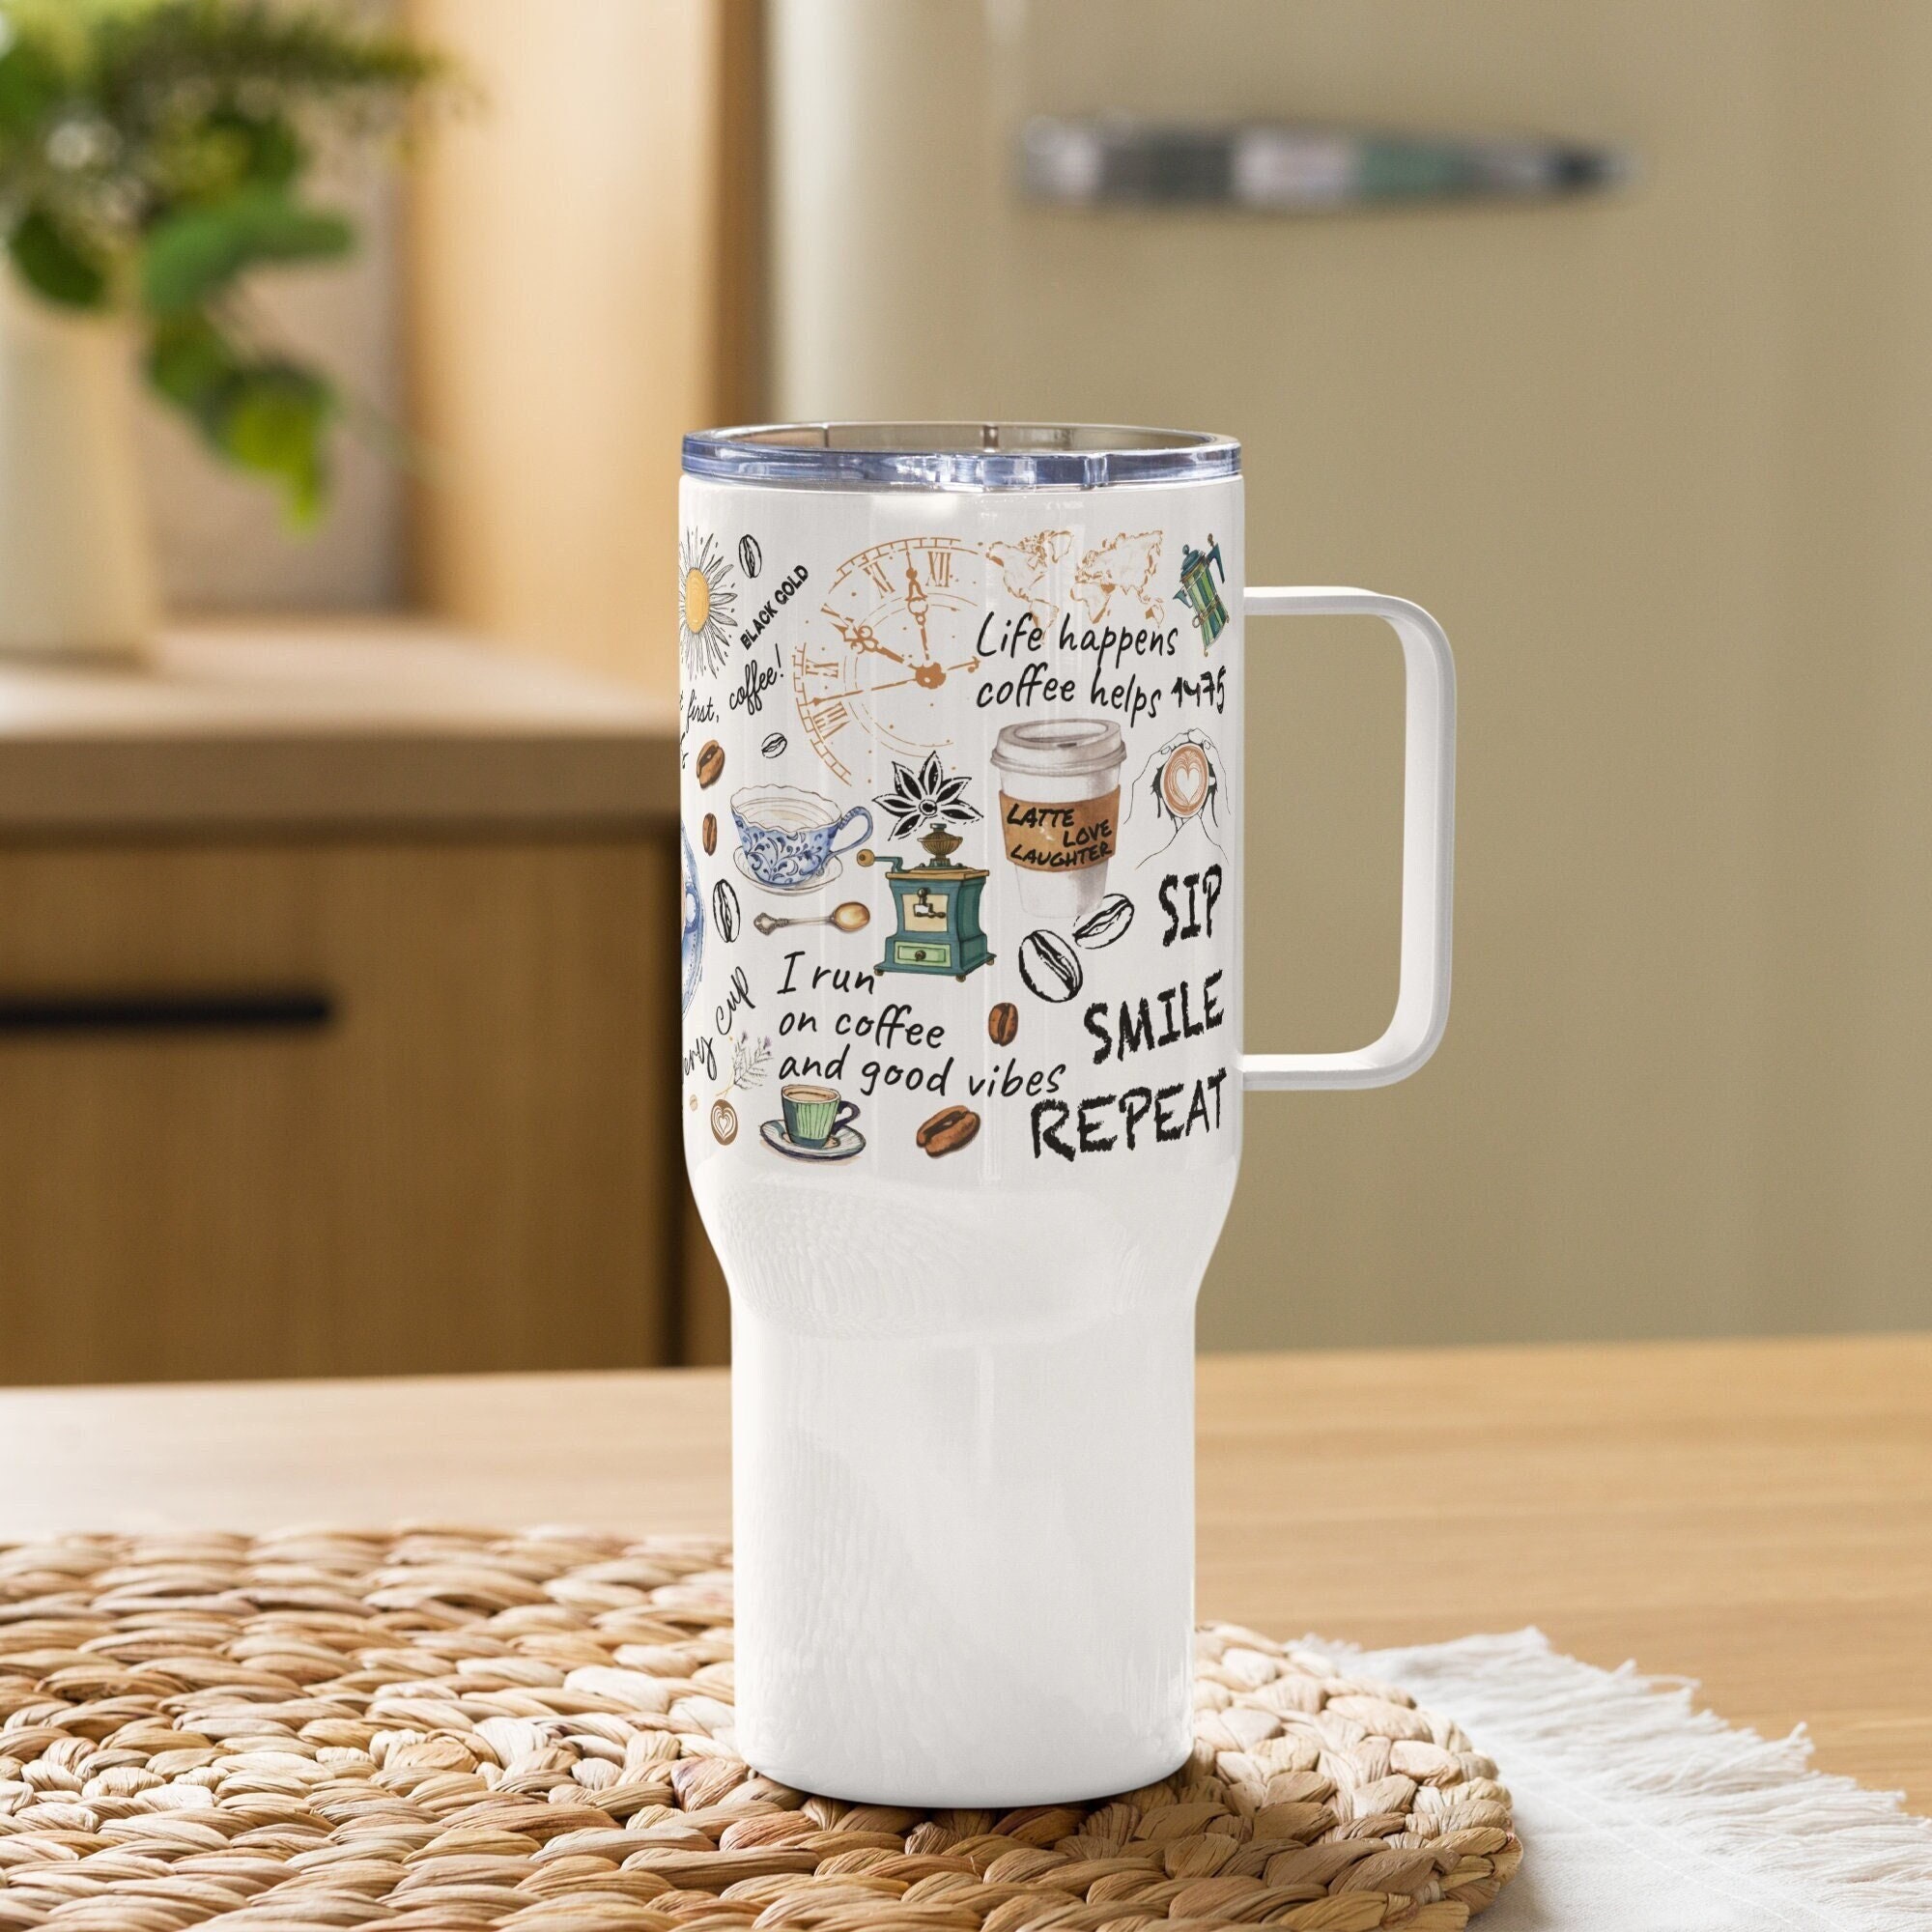 1pc Ceramic Rock Climbing Mug, 17.5oz, Minimalist Creative  Milk/coffee/tea/water Cup